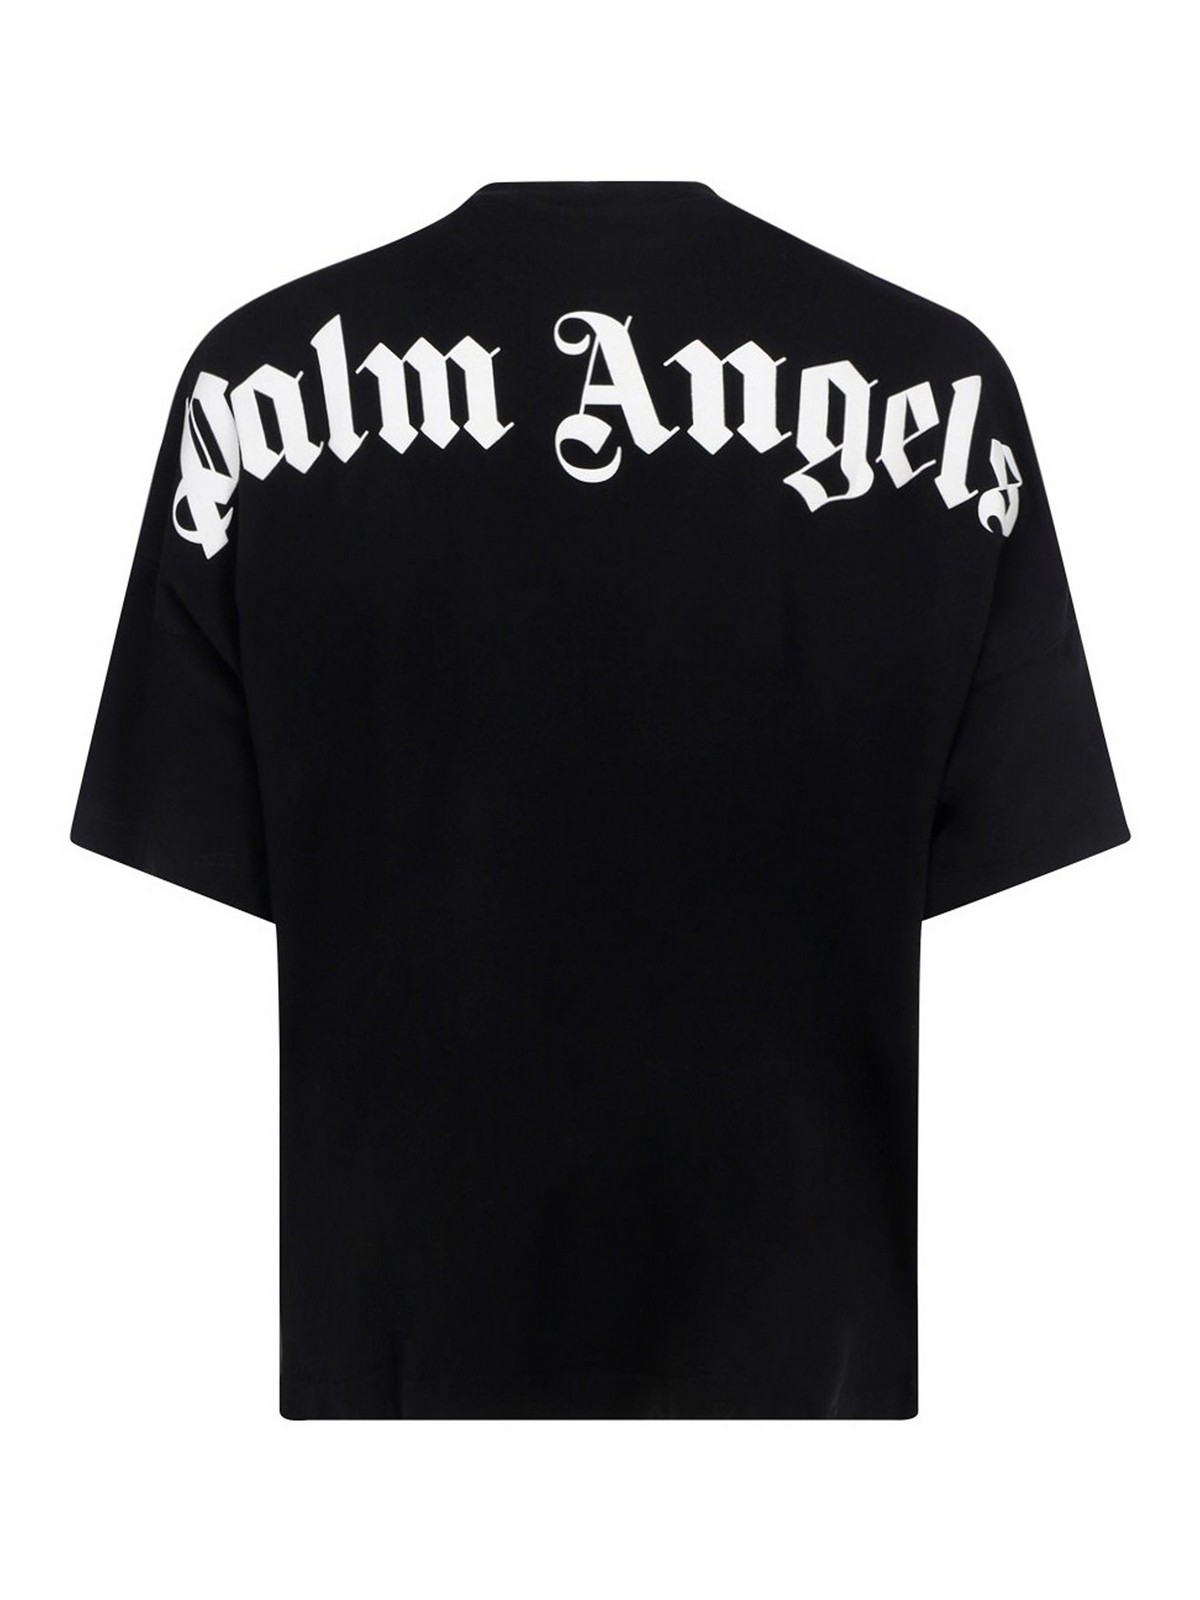 Tシャツ Palm Angels - Tシャツ - 黒 - PMAA002R21JER0011001